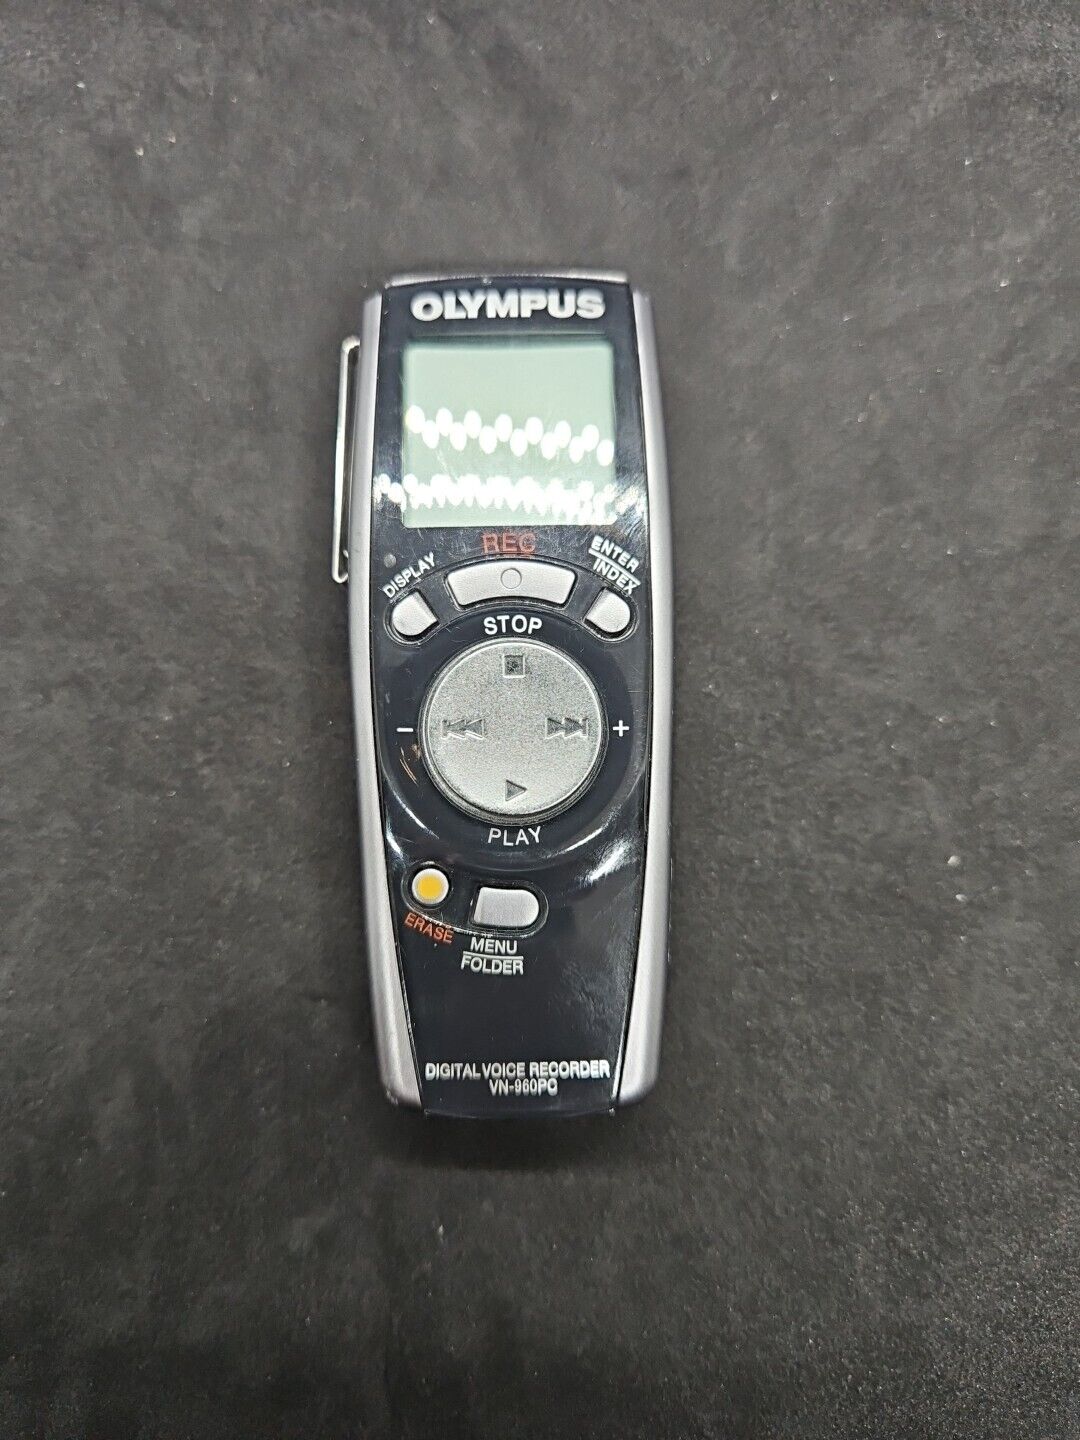 Olympus VN-960PC (128 MB, 16.5 Hours) Handheld Digital Voice Recorder 